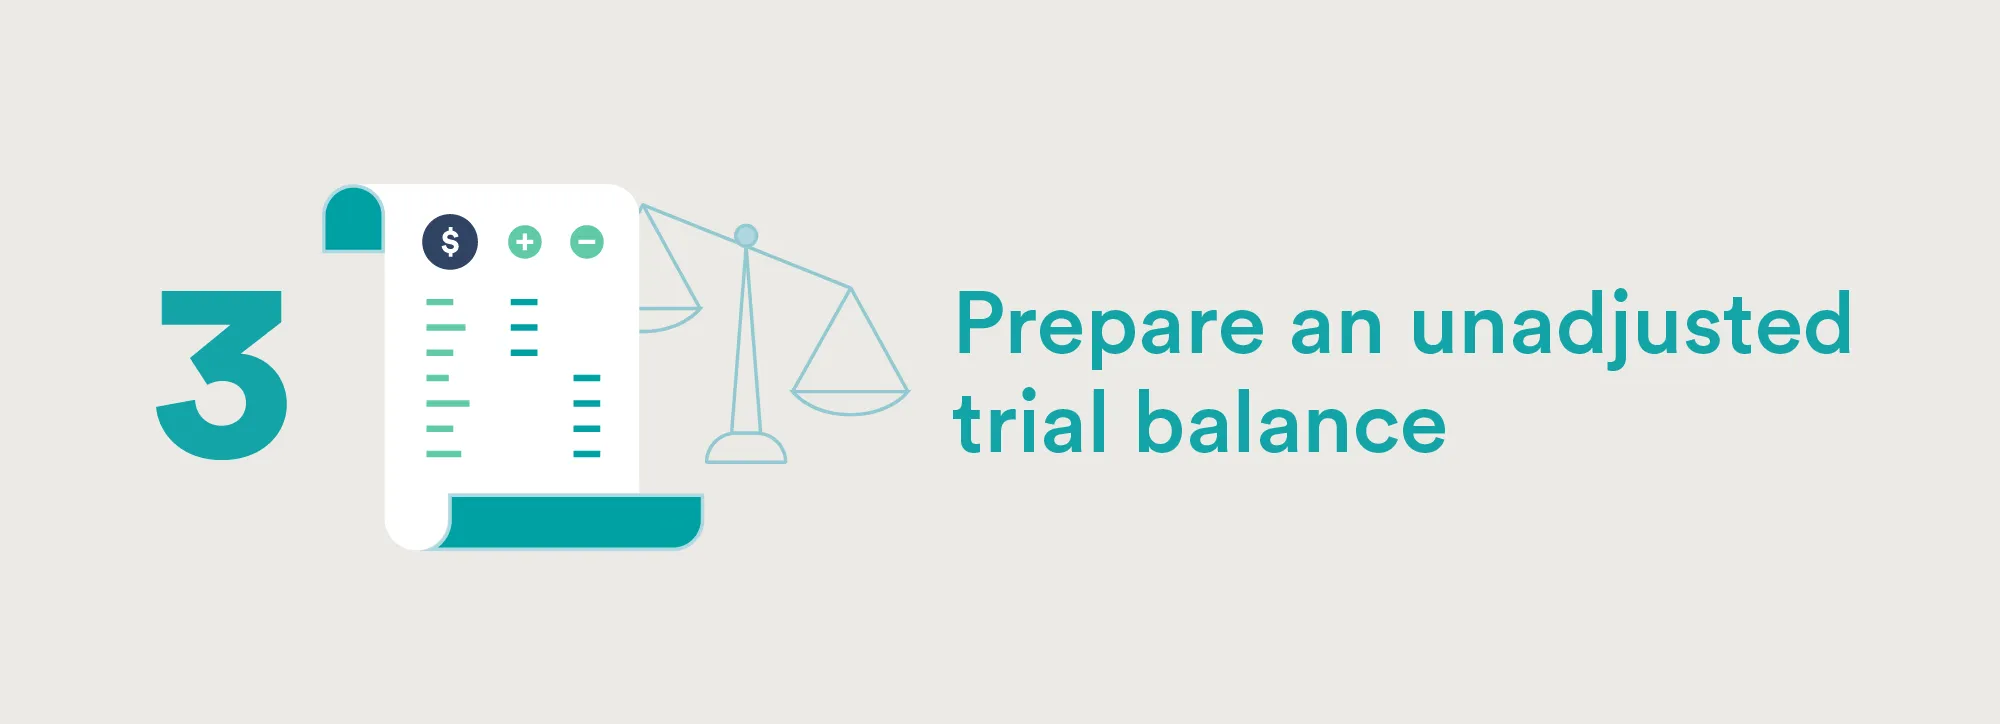 Accounting Cycle Step Three: Prepare an unadjusted trial balance